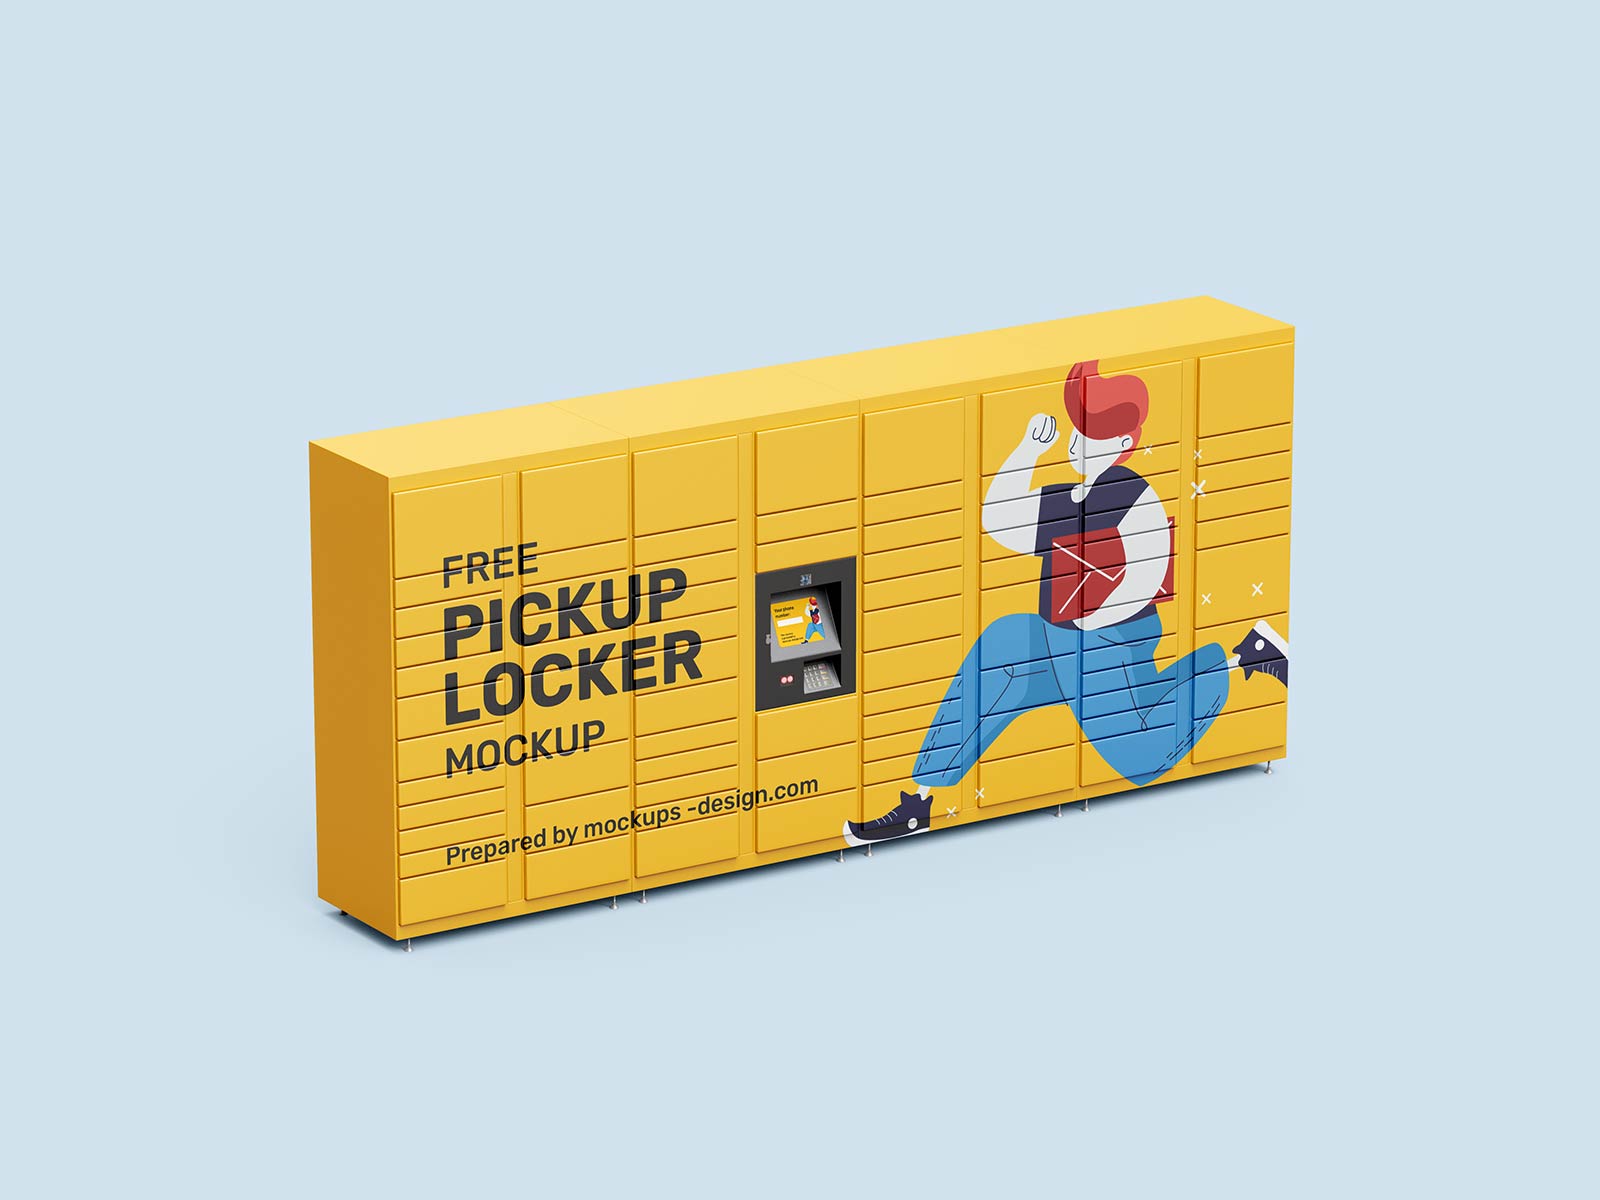 Free Pickup Locker Mockup PSD